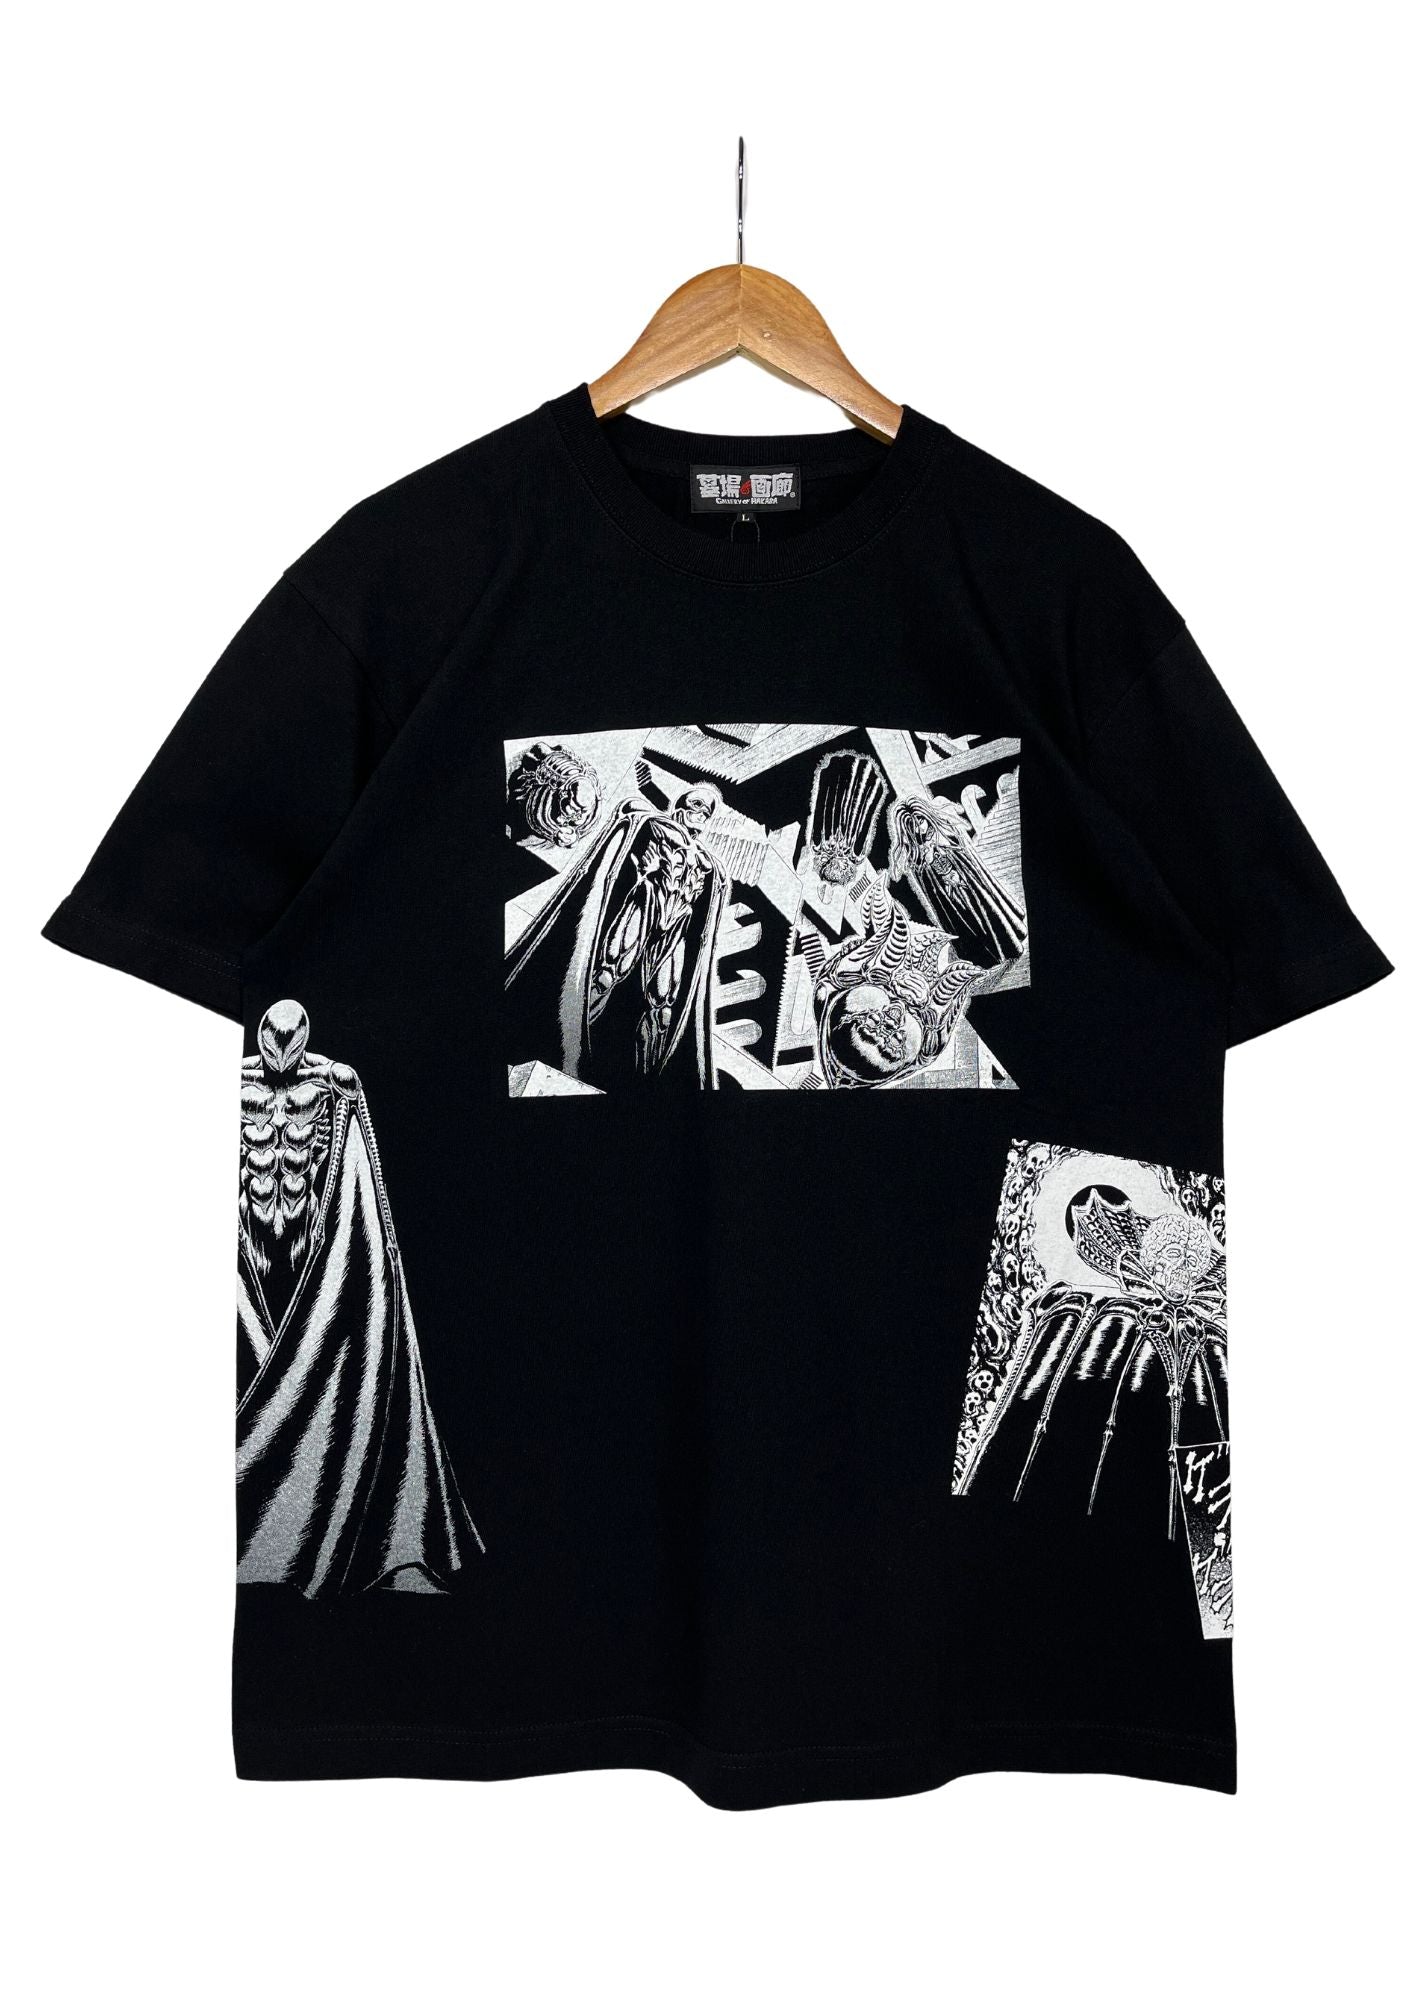 Berserk x Hakabagarou God Hand Exhibition Limited T-shirt